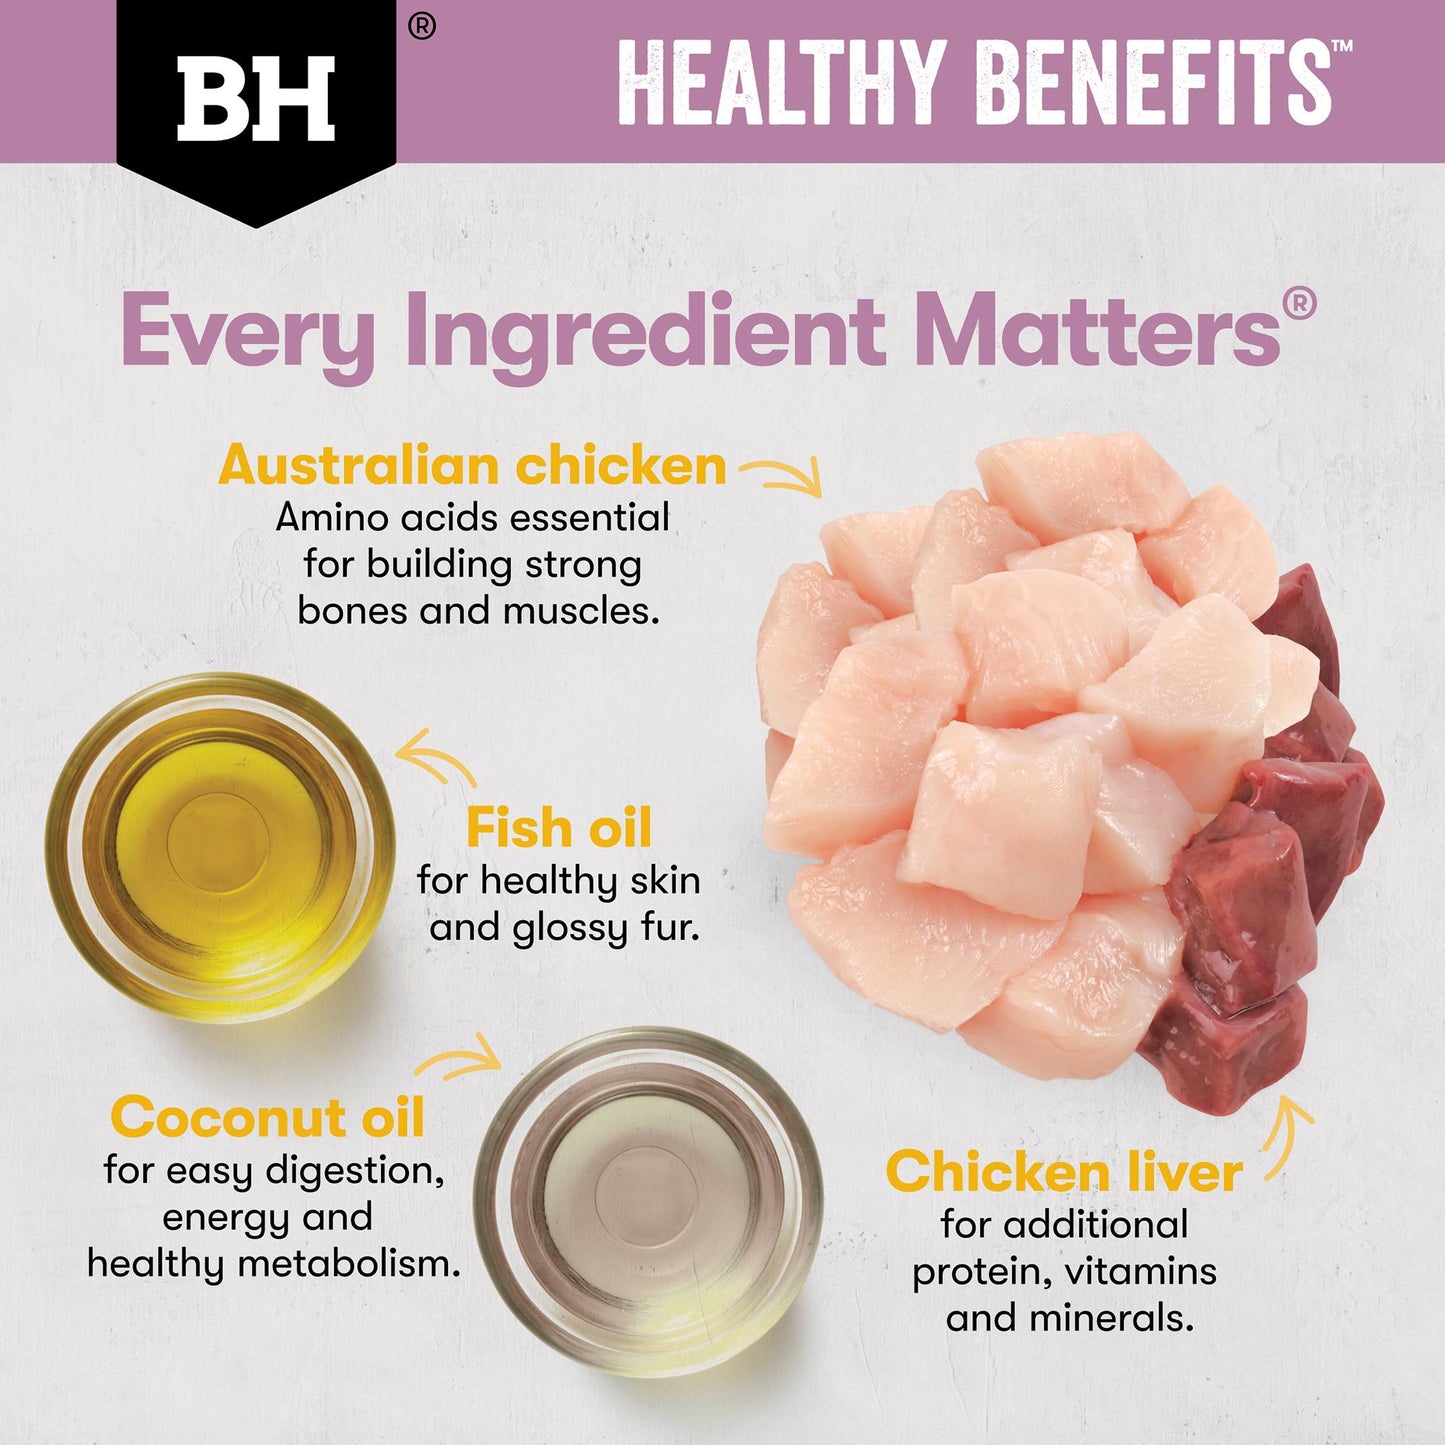 Black Hawk Healthy Benefits Hairball Chicken Dry Cat Food